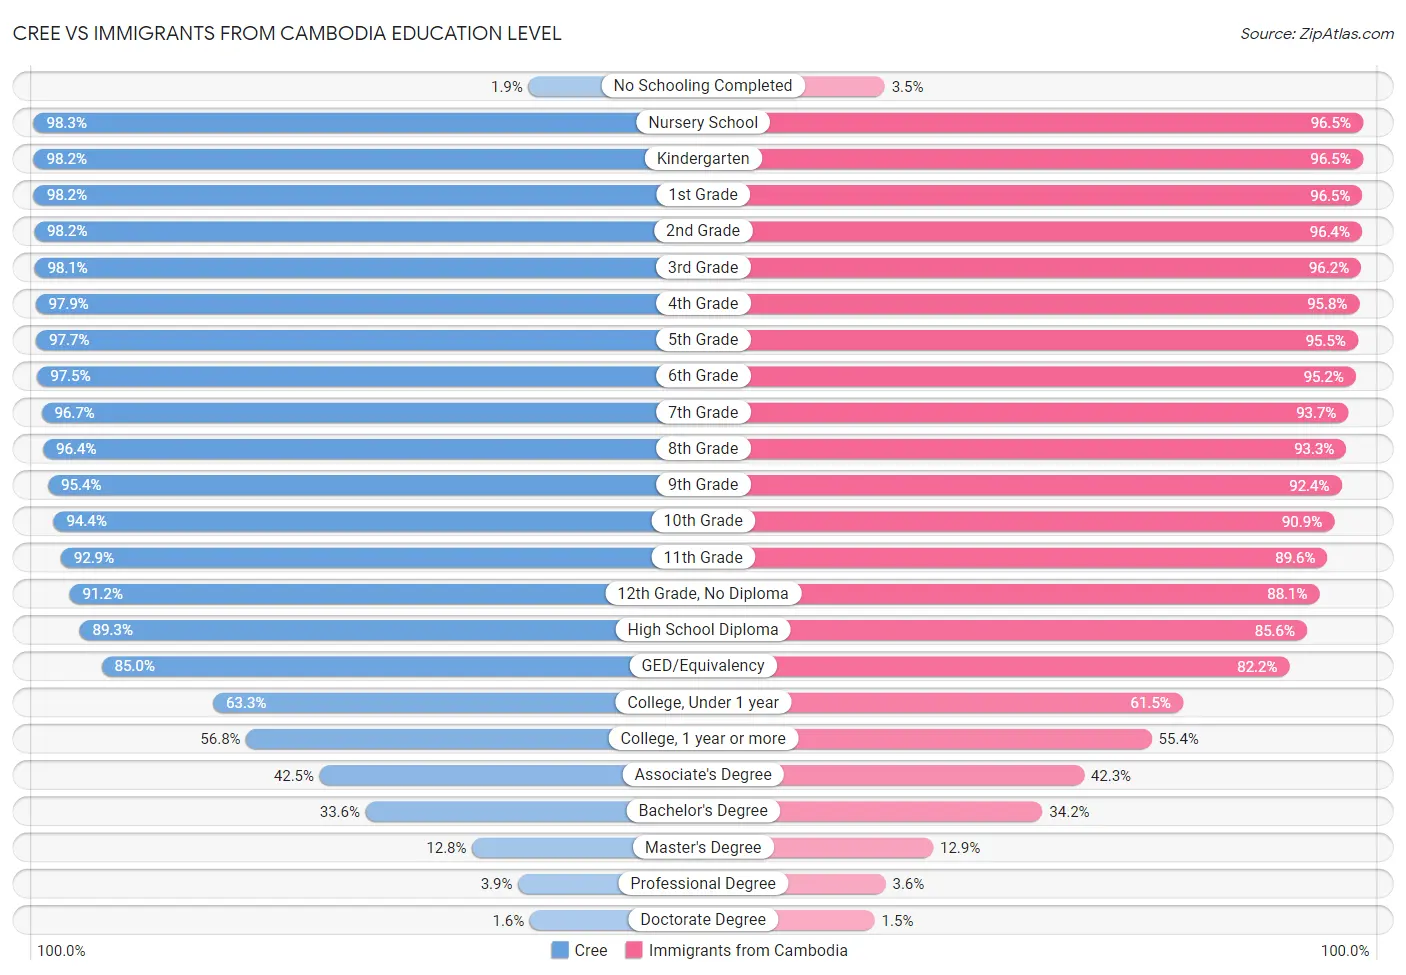 Cree vs Immigrants from Cambodia Education Level